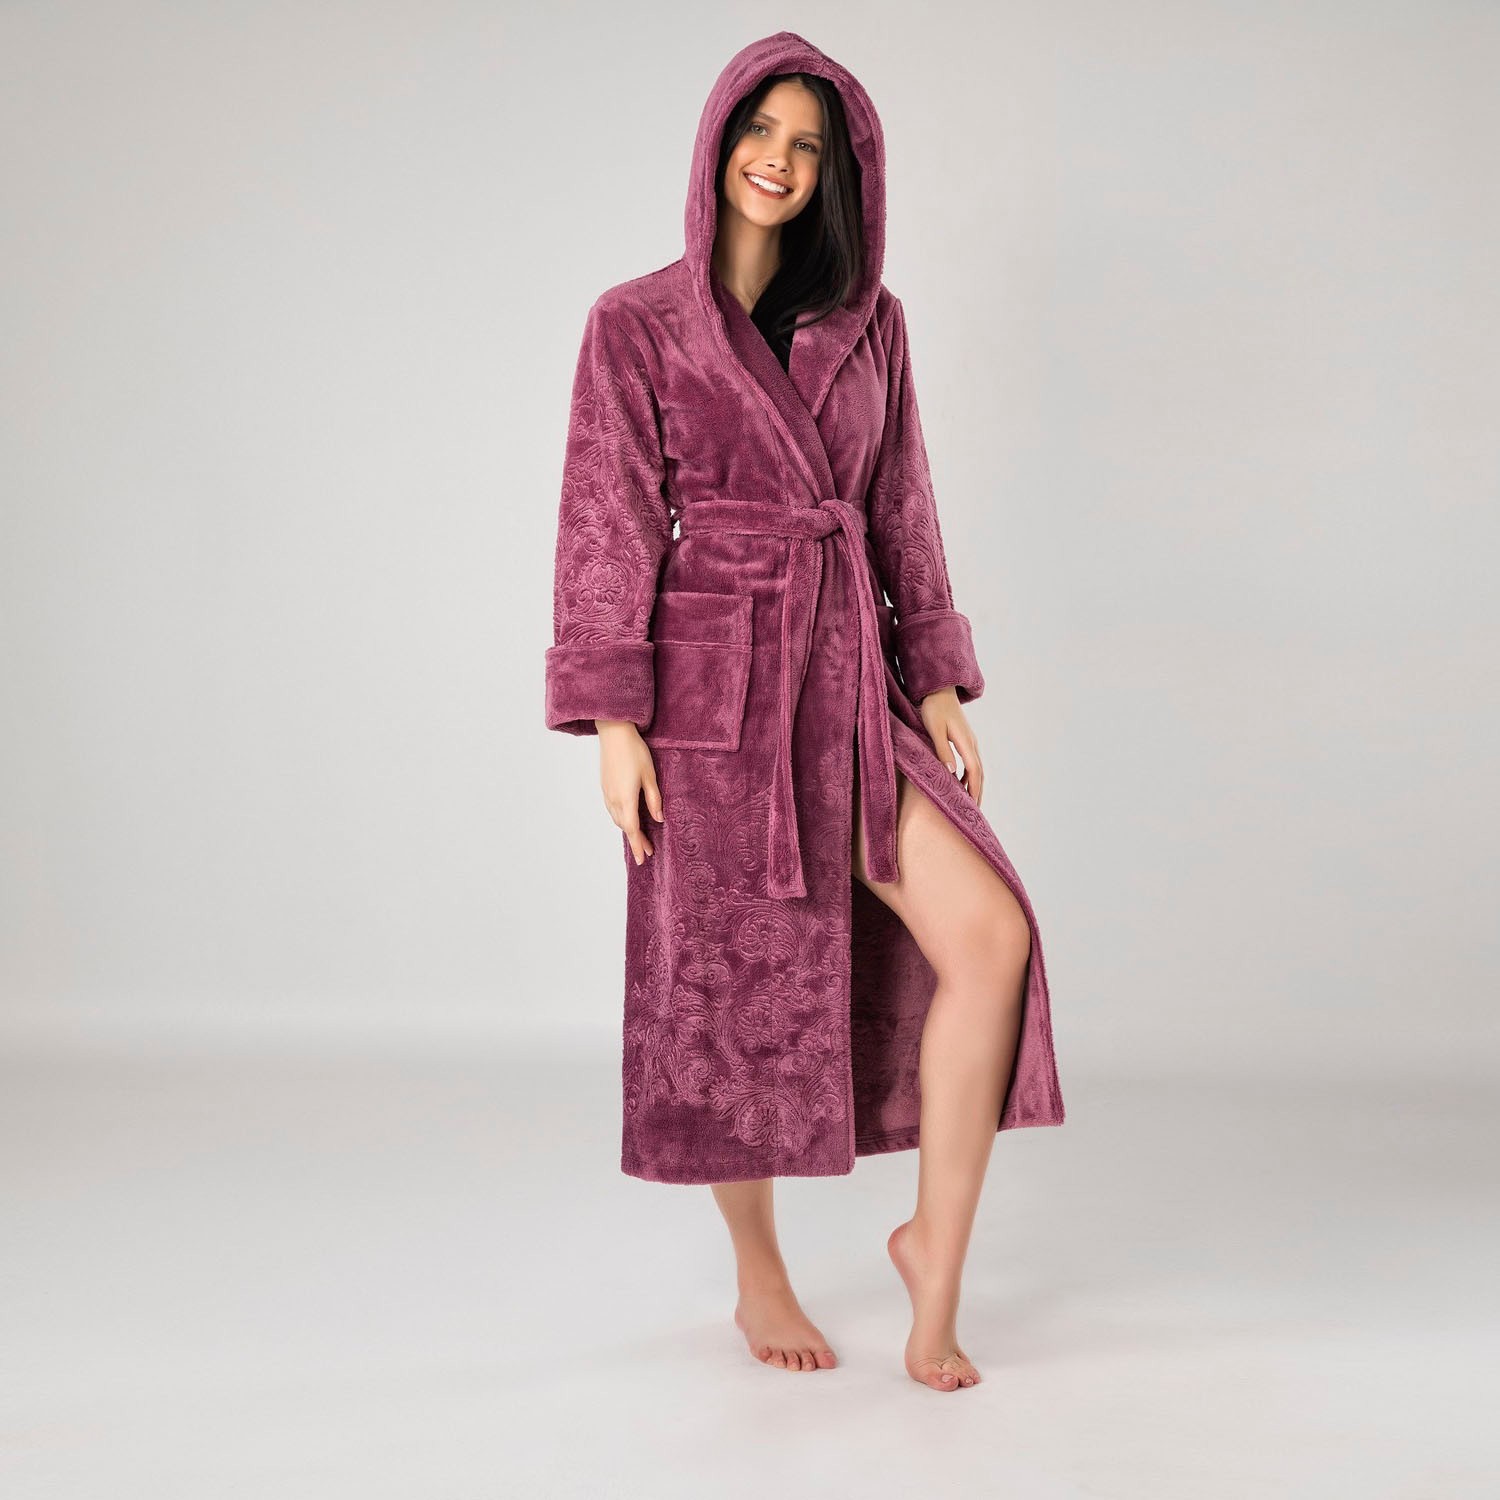 Банный халат Helin цвет: фиолетовый (S)